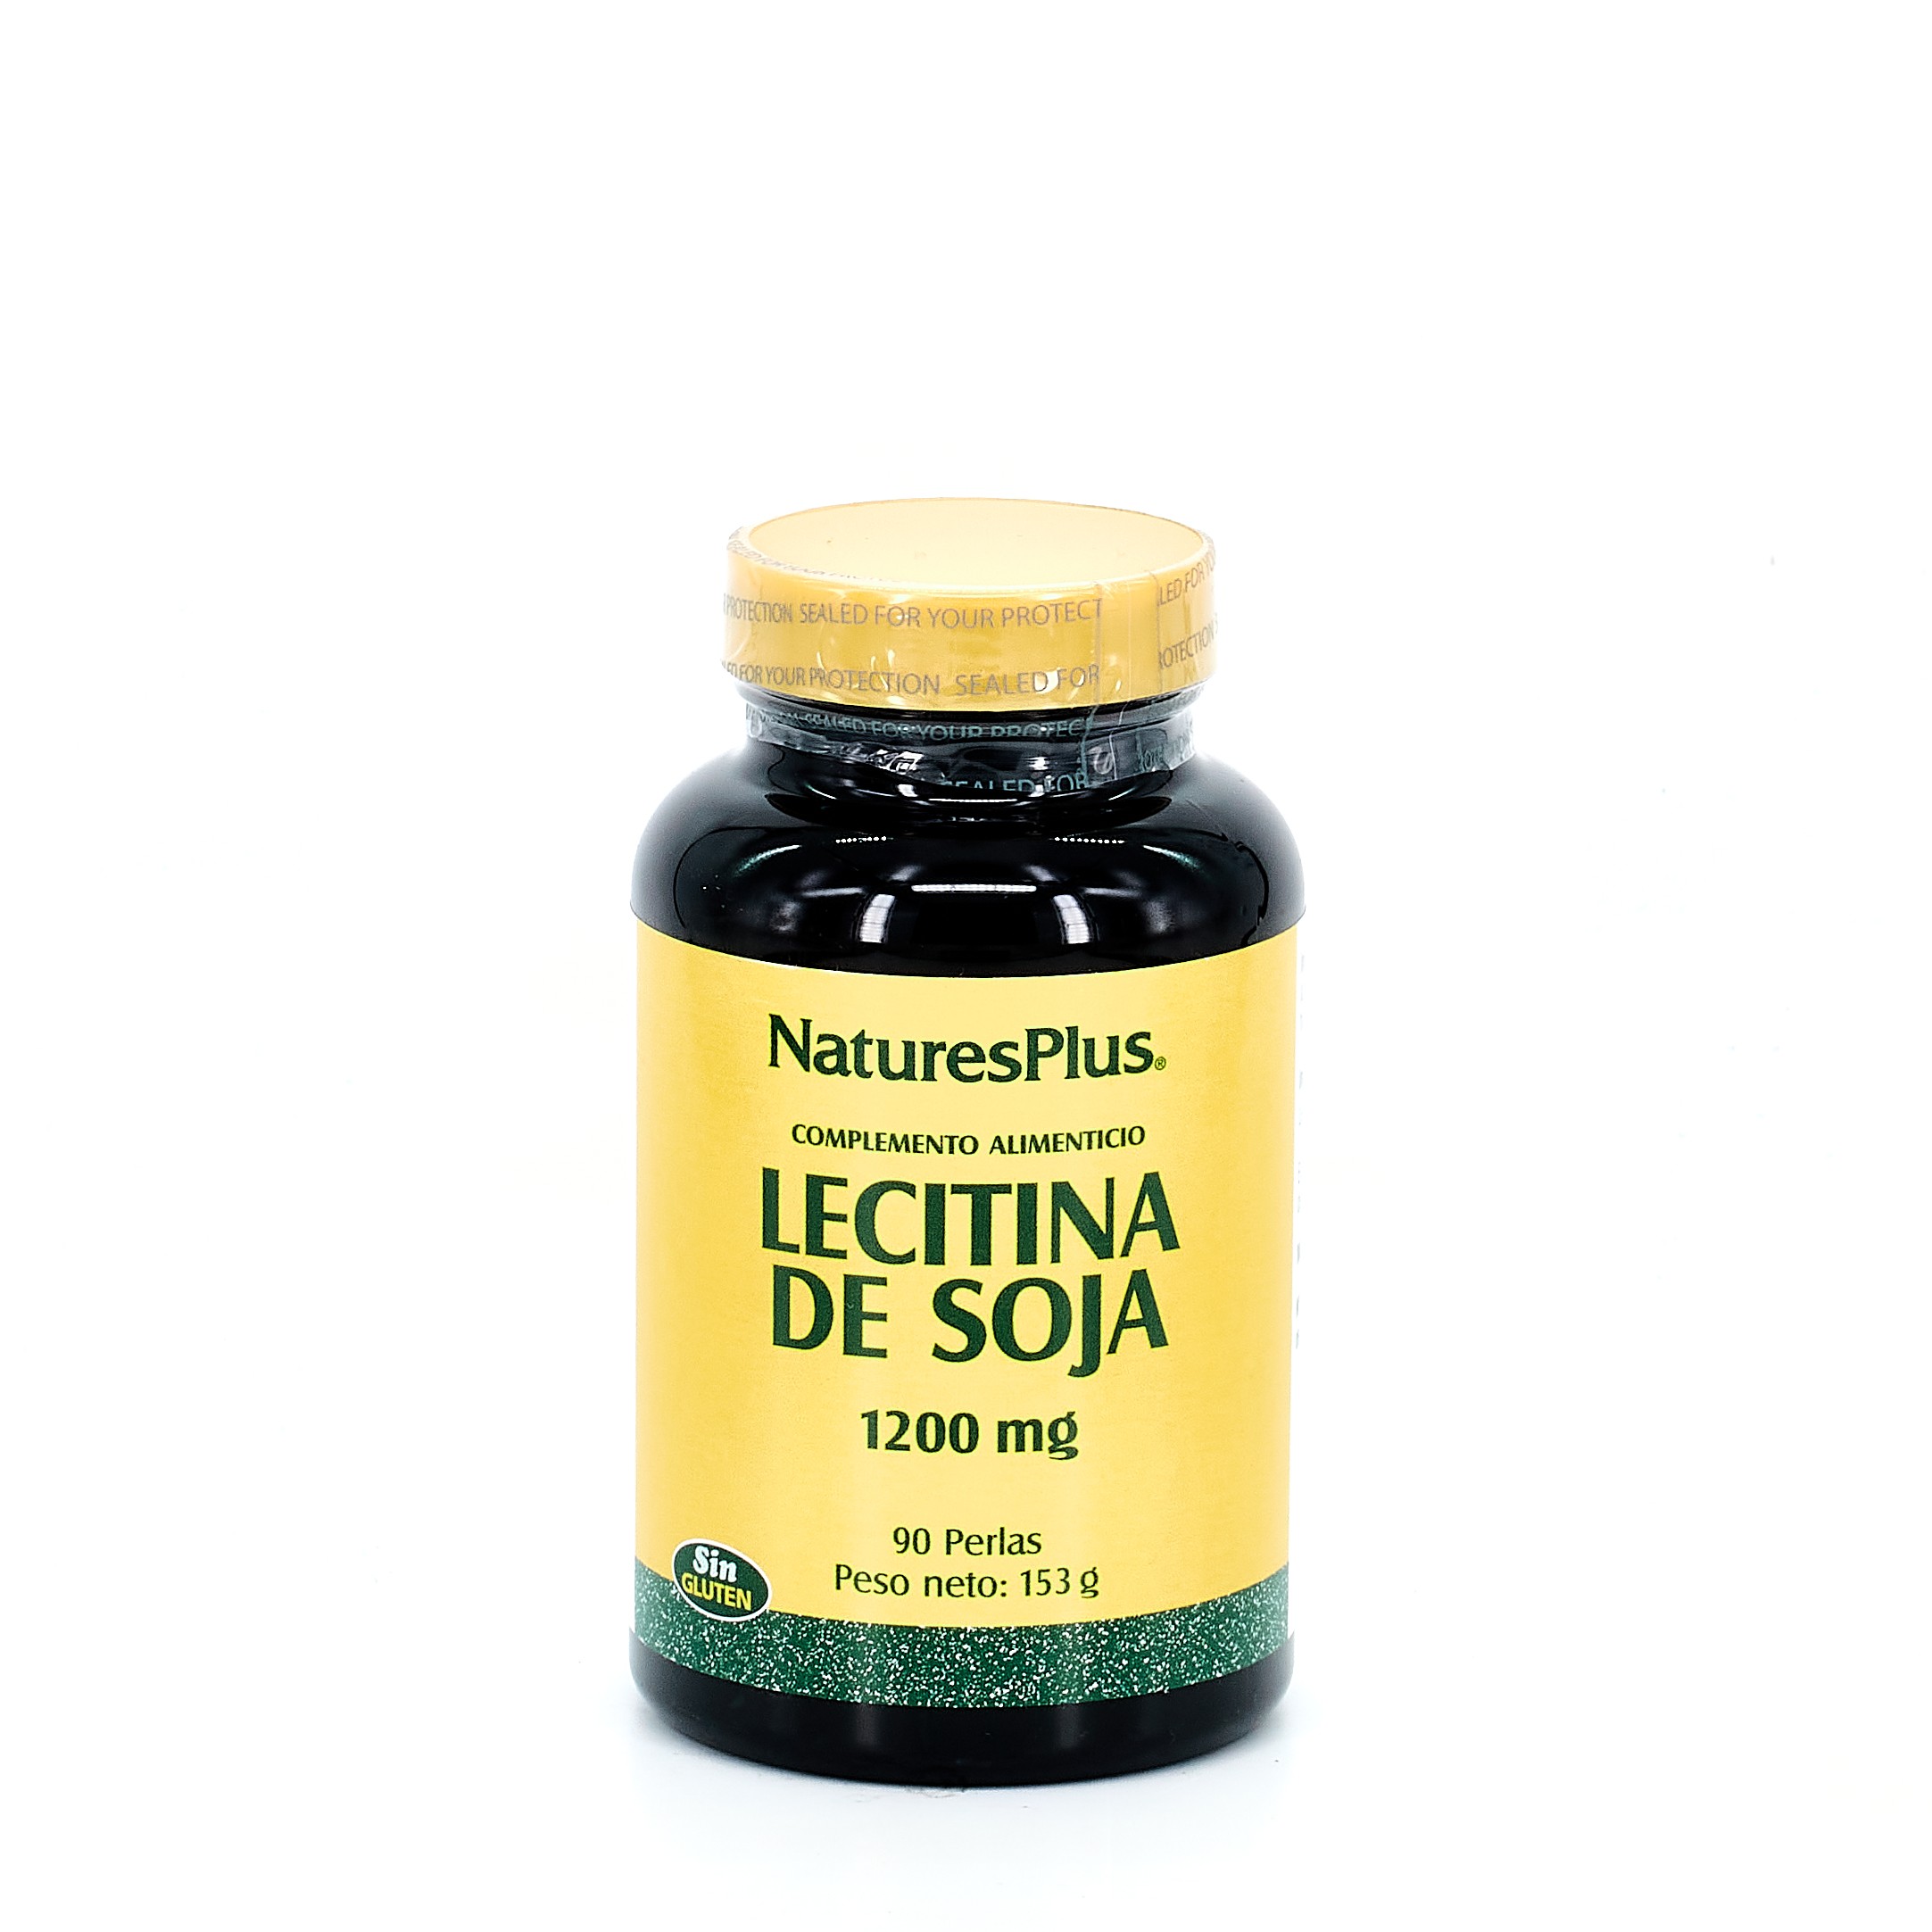 Nature's plus lecitina de soja 1200 mg. 90 perlas